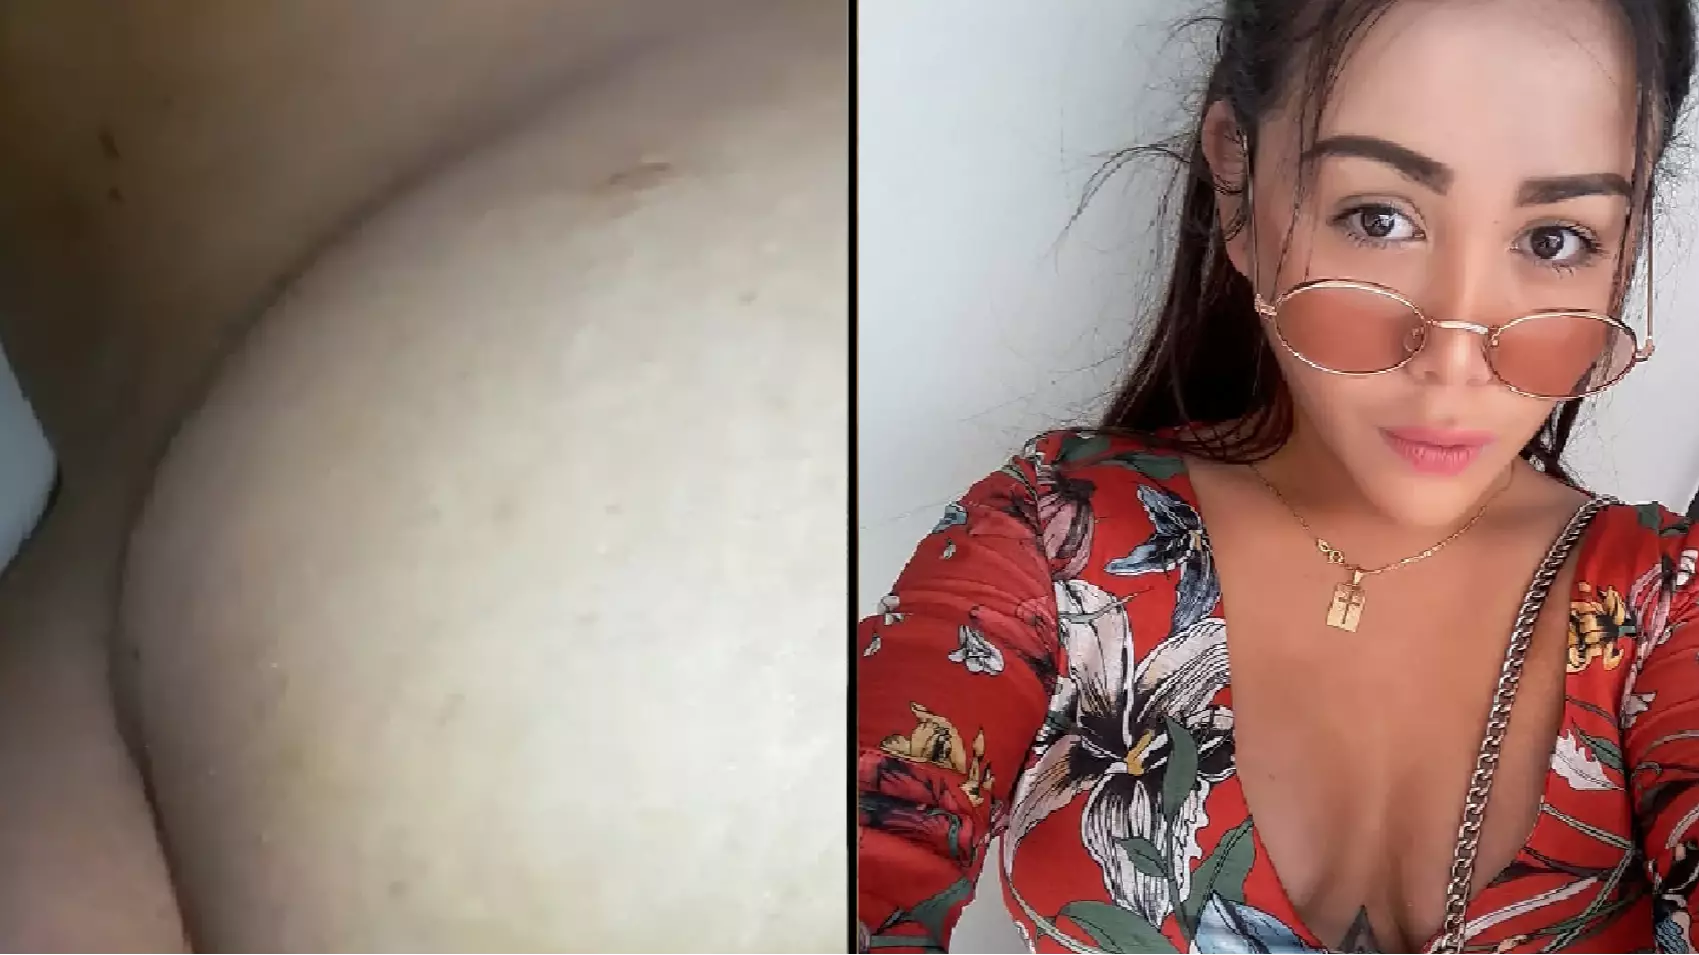 Woman Warns Against Butt Enhancement After Procedure Backfires... After Three Years 